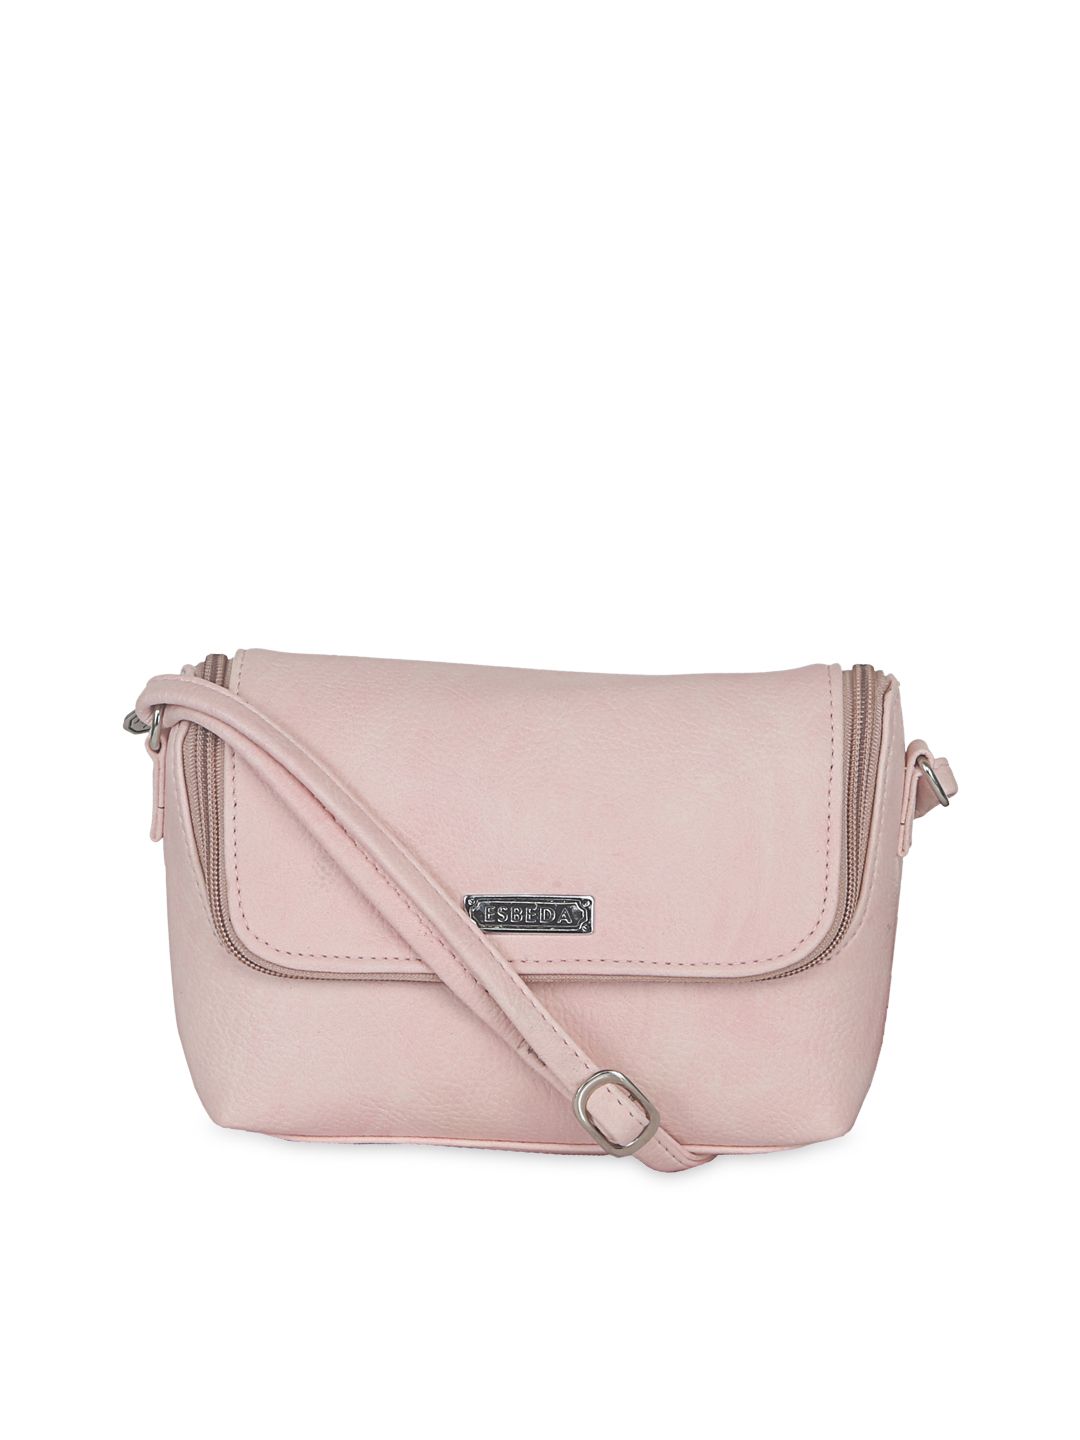 ESBEDA Pink Sling Bag Price in India